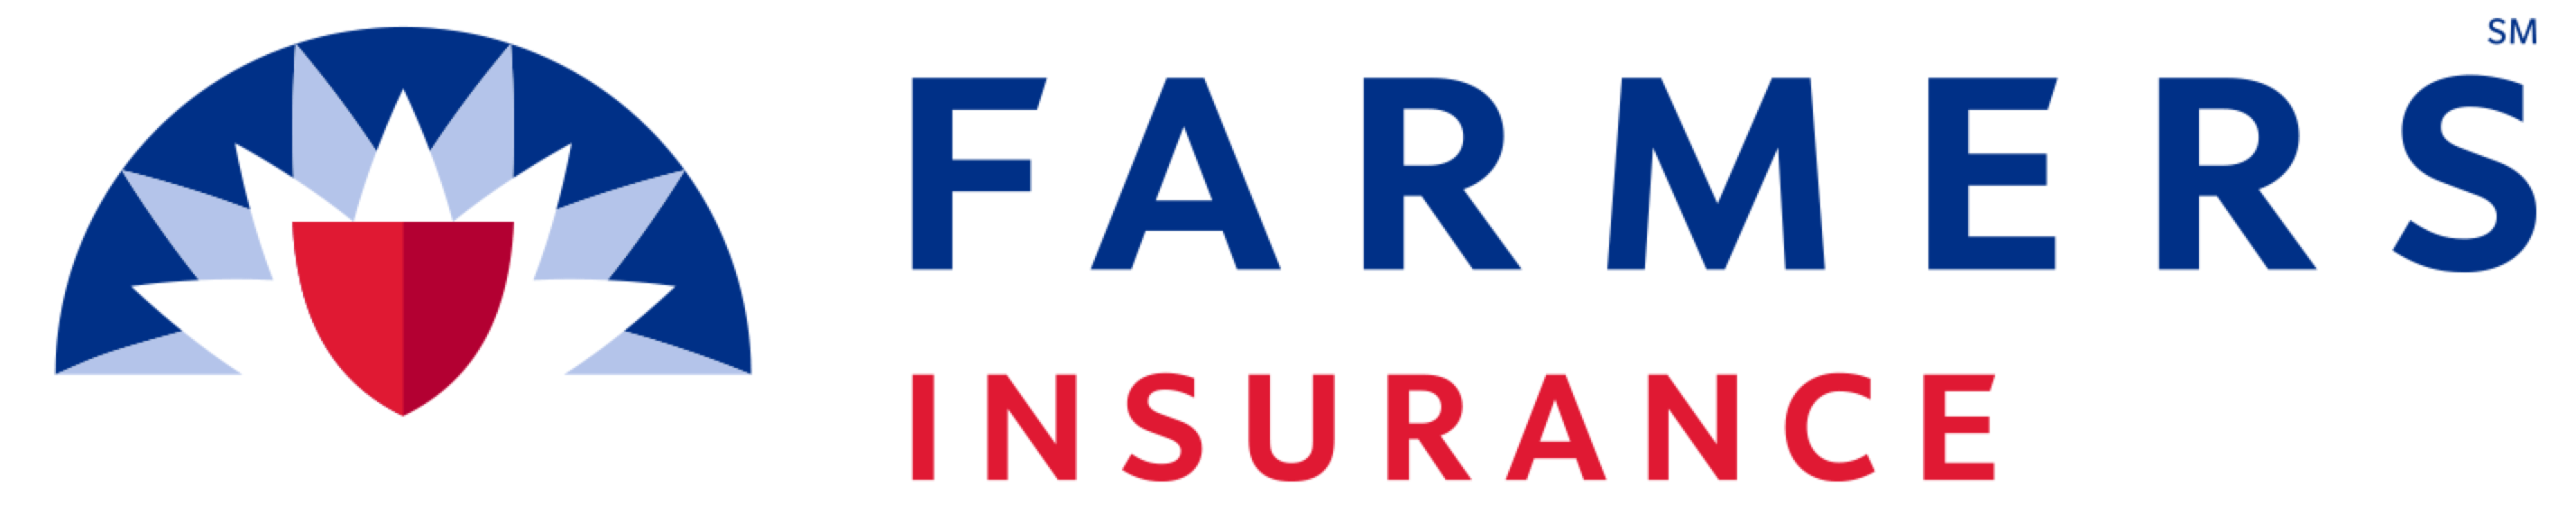 Automotive Insurance Logo - Auto Insurance Coverage with Farmers Insurance